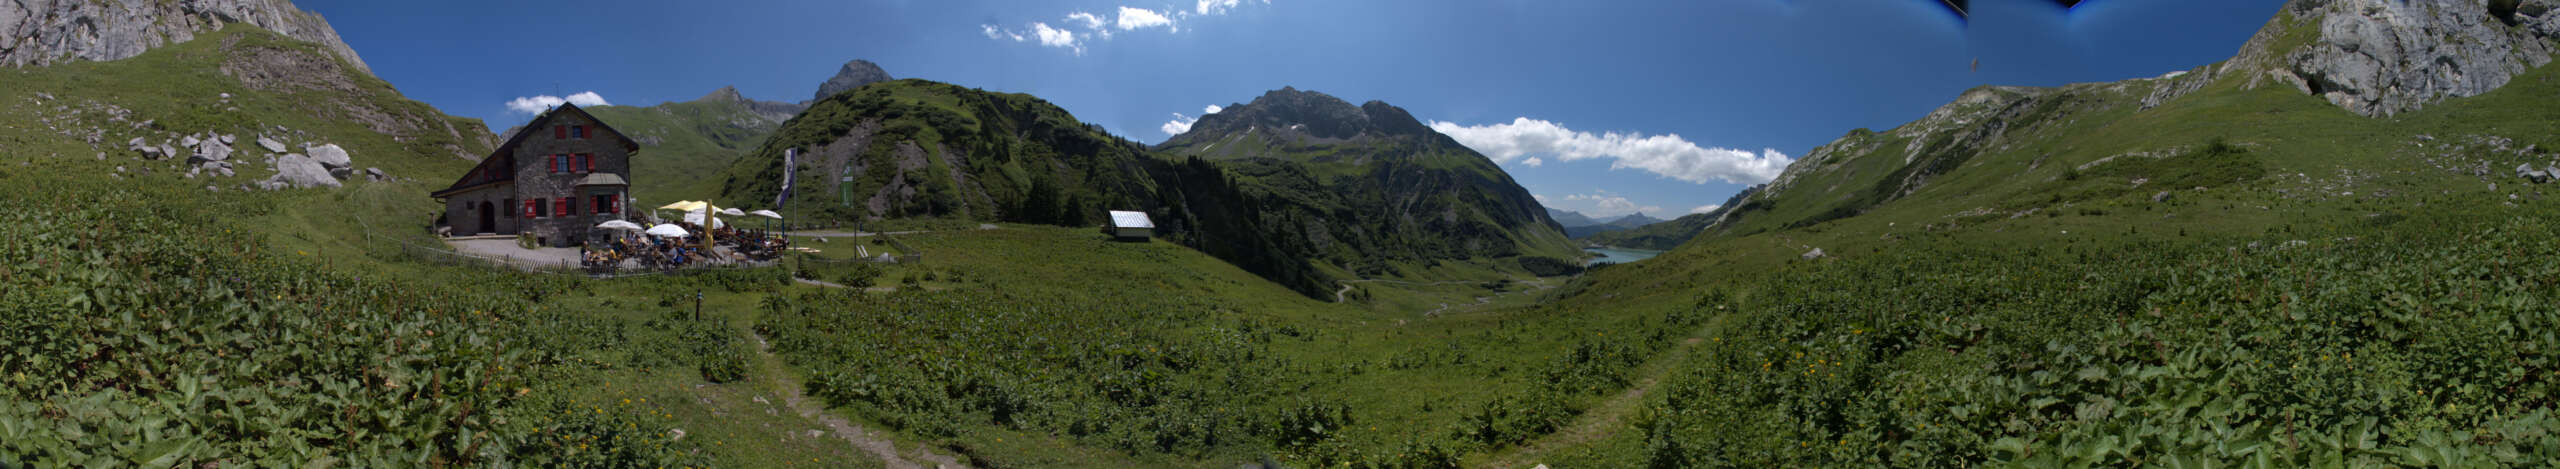 Panaorama Ravensburger Hütte